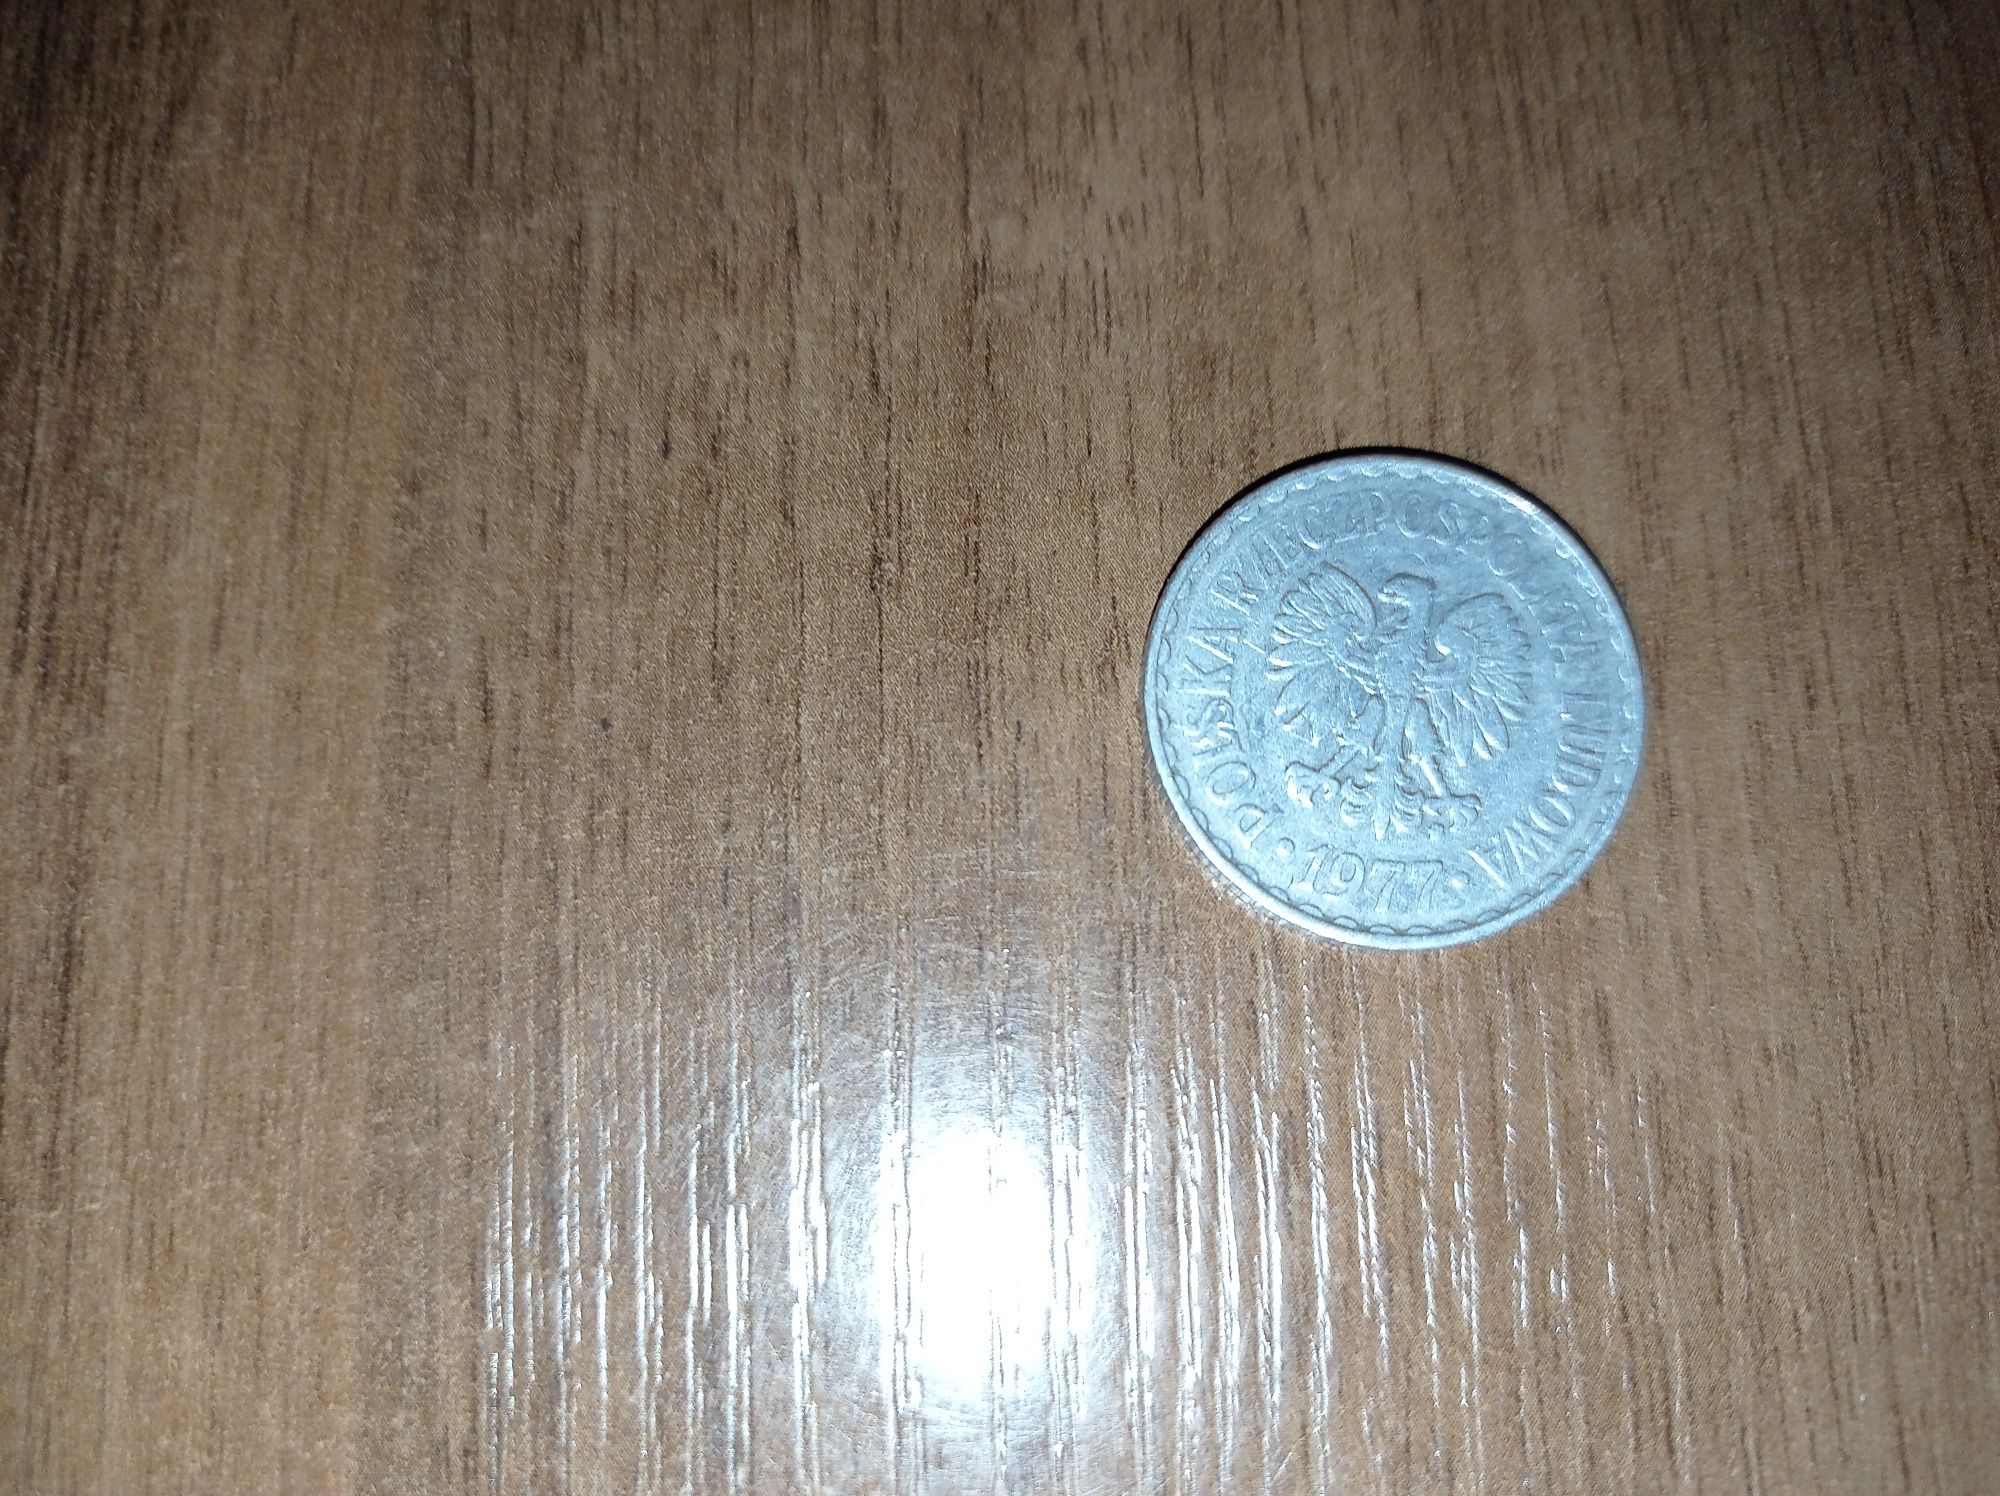 Stara moneta 1 zł z roku 1977